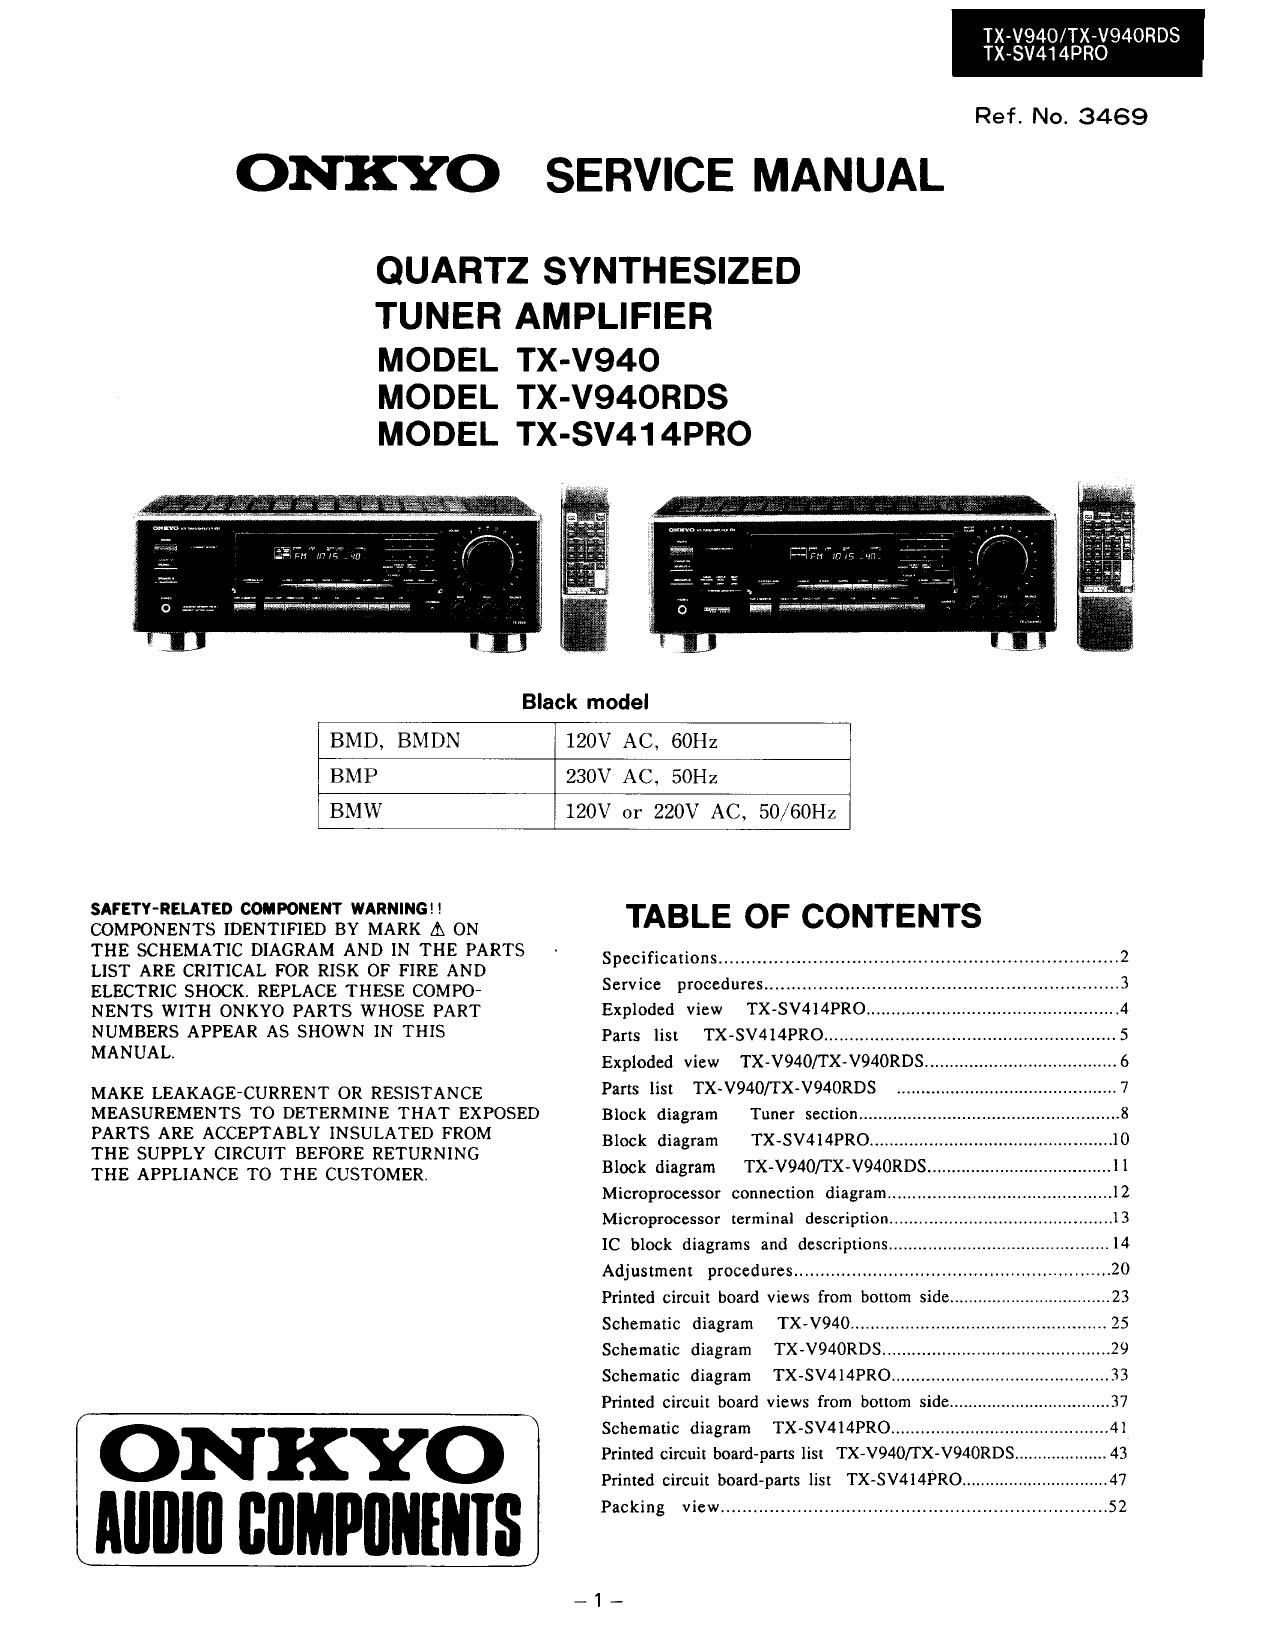 Onkyo TXV 940 RDS Service Manual